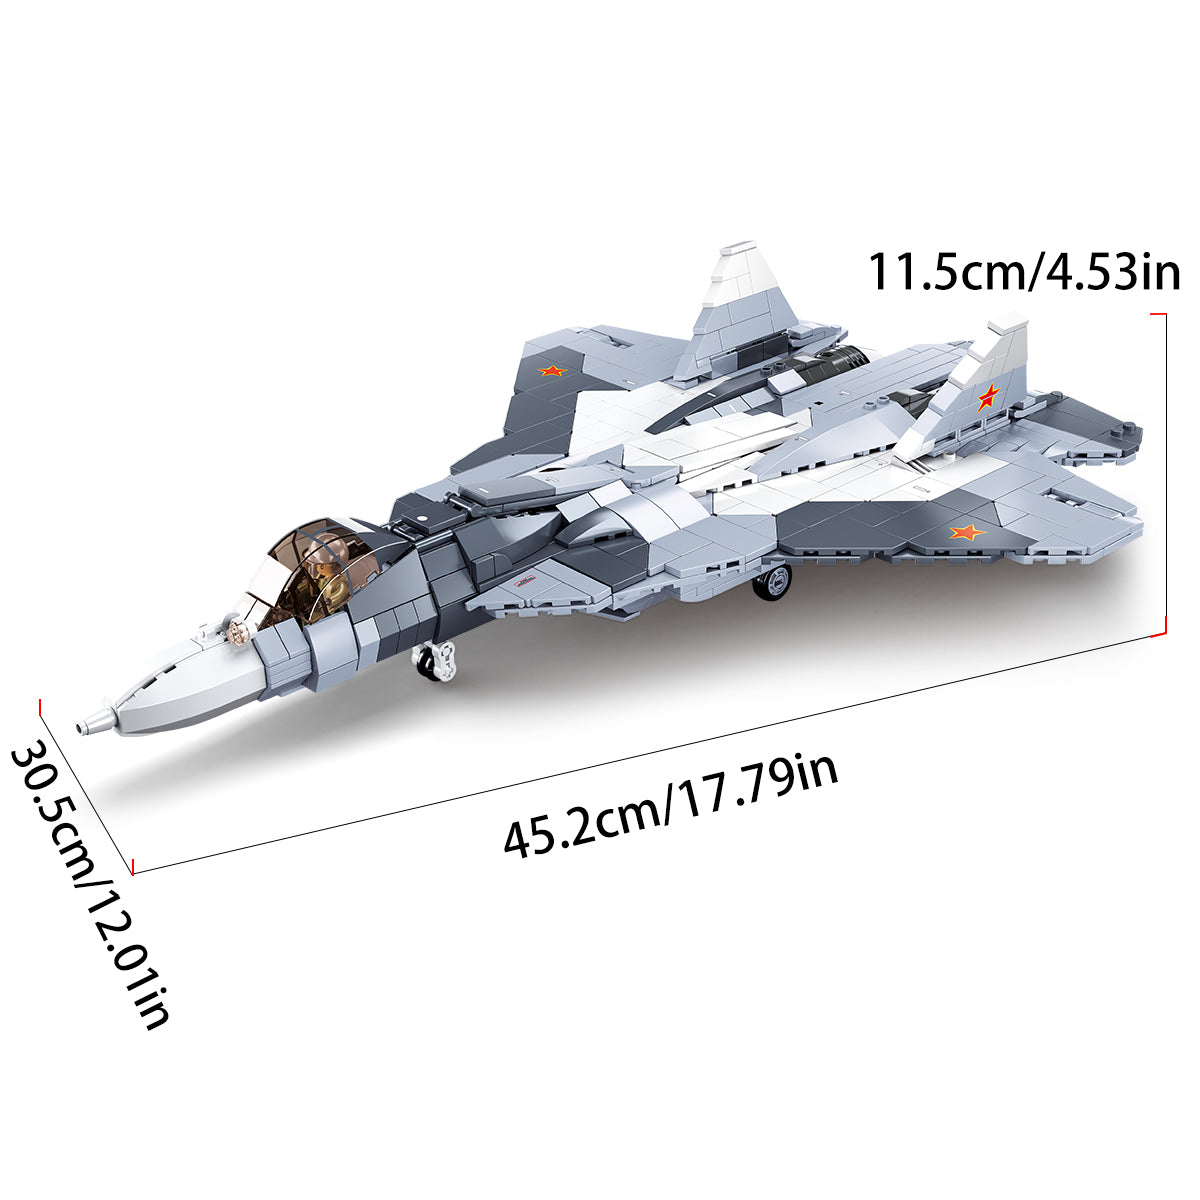 DAHONPA Military Series Su-57 Felon Fighter Building Blocks Set with 893 Pieces